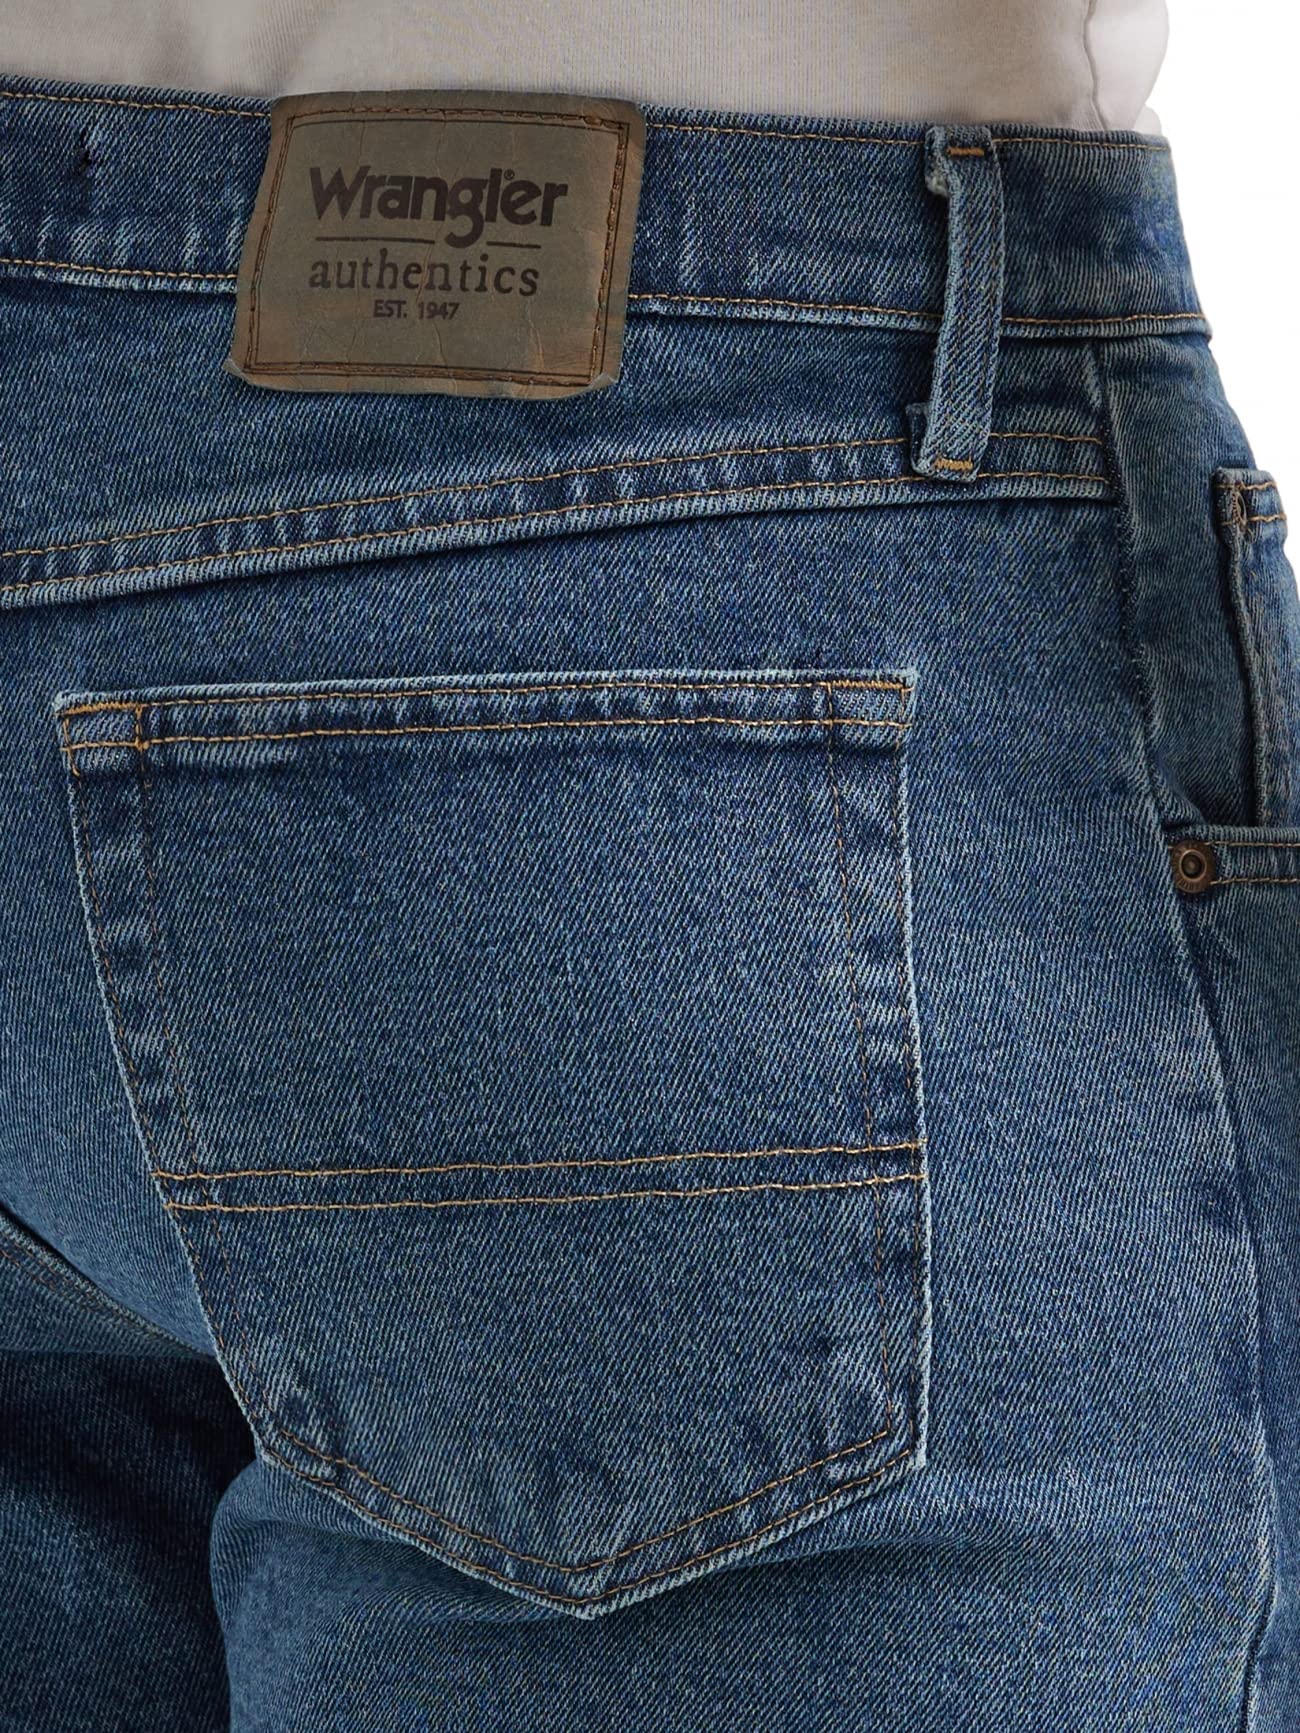 Wrangler Authentics Men's Classic 5-Pocket Relaxed Fit Jean, Dark Stonewash Flex, 35W x 32L